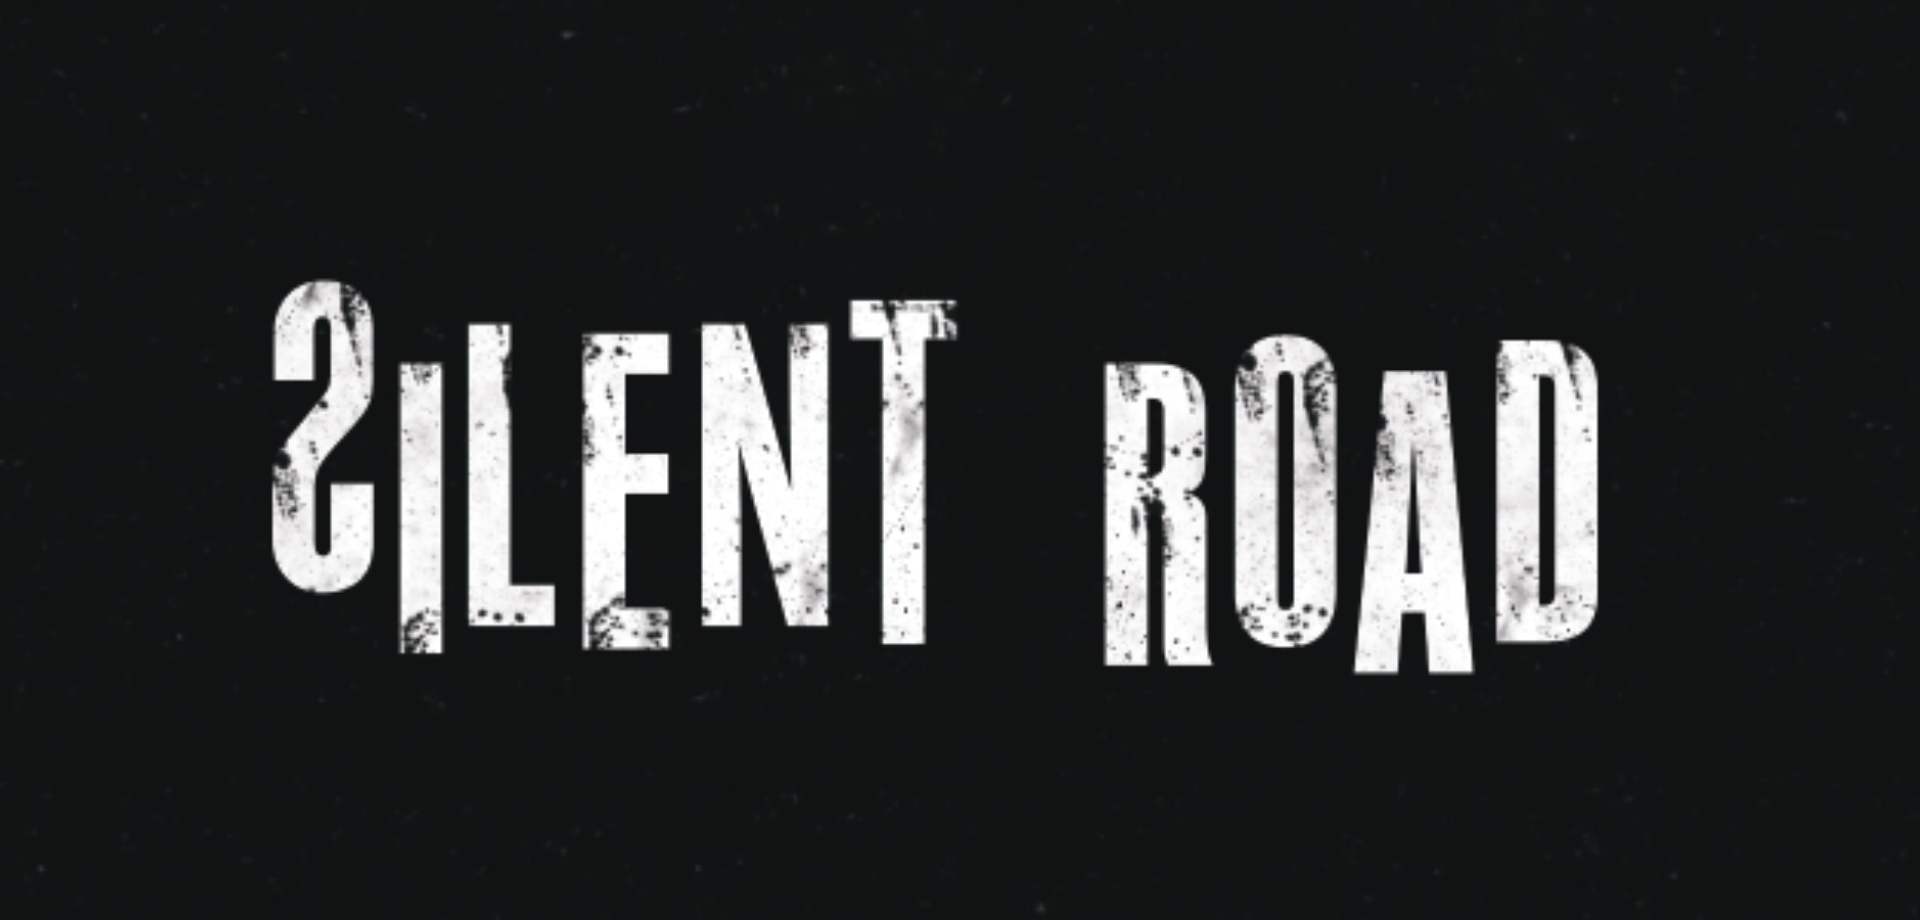 Silent Road